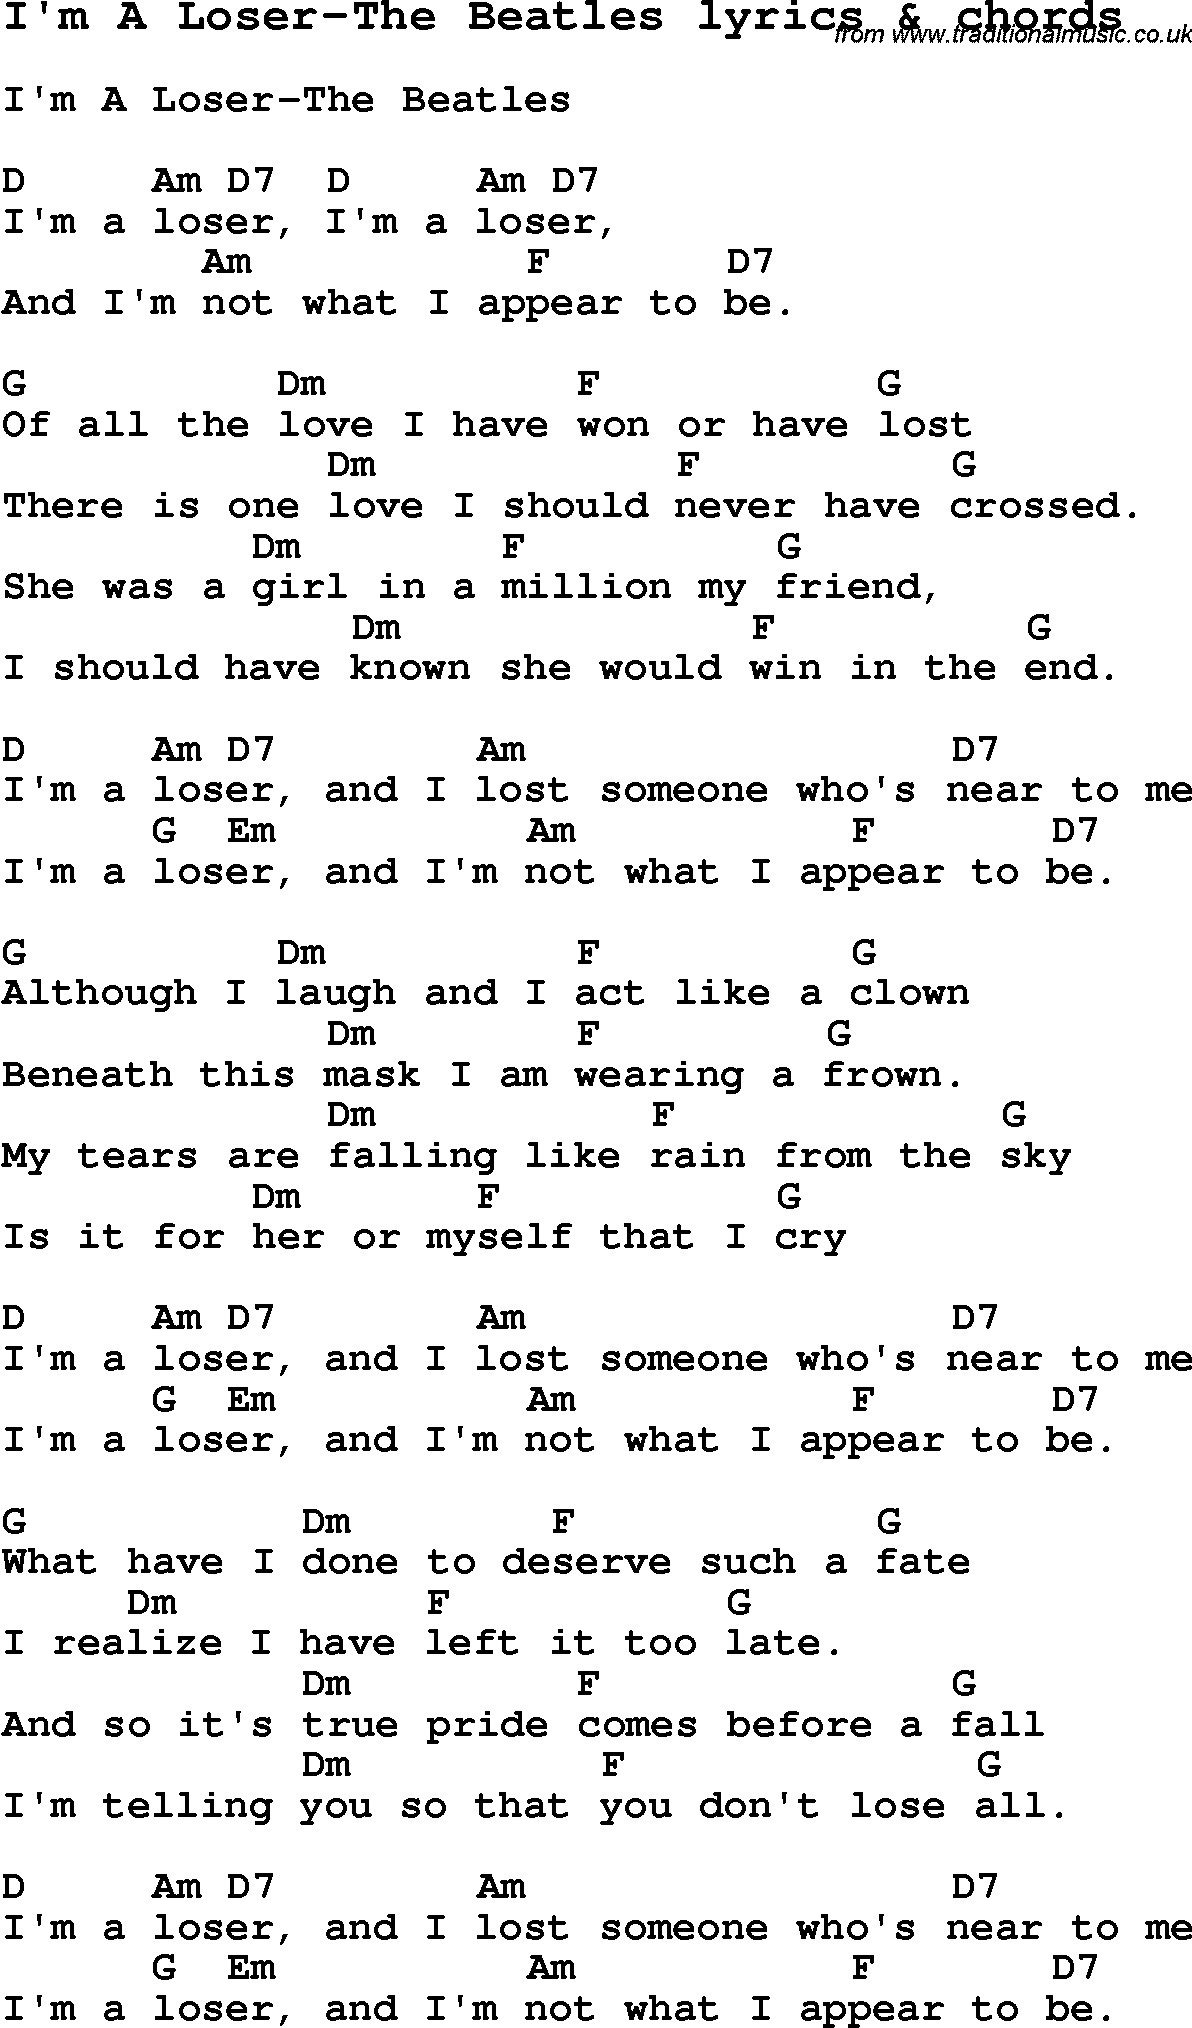 Love Song Lyrics for: I'm A Loser-The Beatles with chords for Ukulele, Guitar Banjo etc.